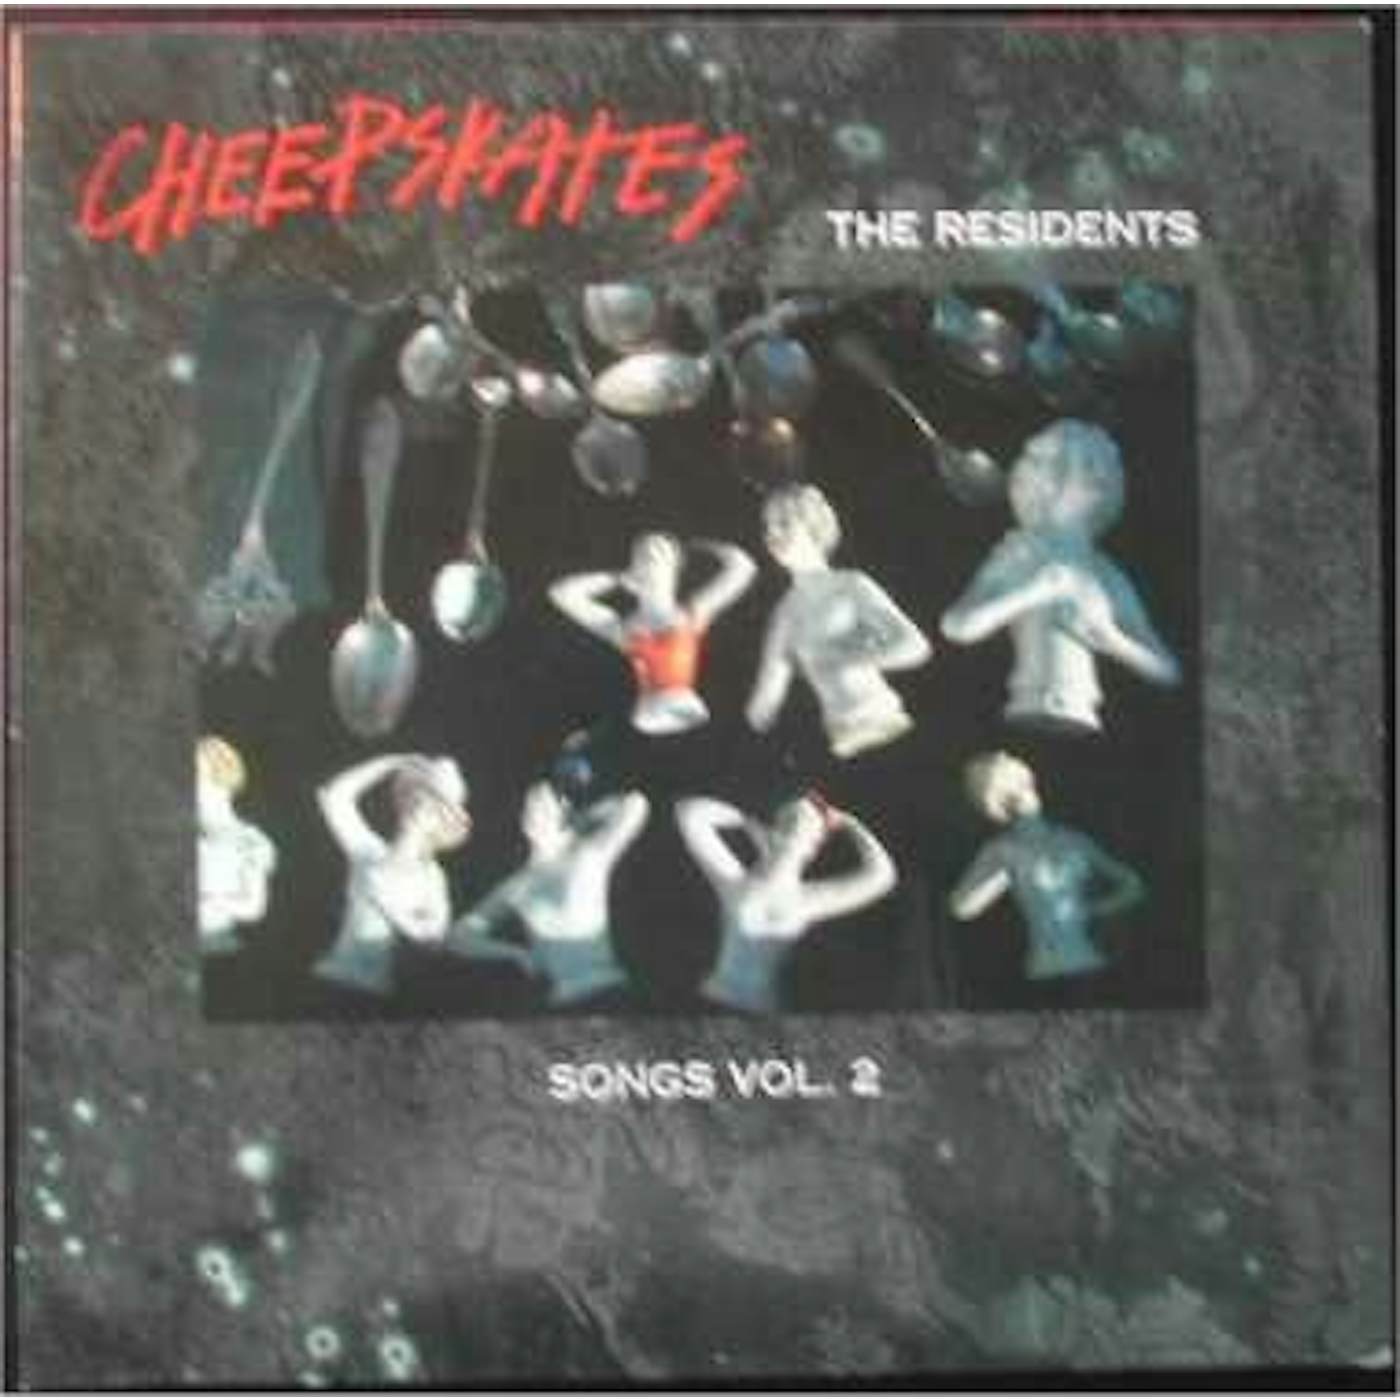 Cheepskates SONGS 2: RESIDENTS Vinyl Record